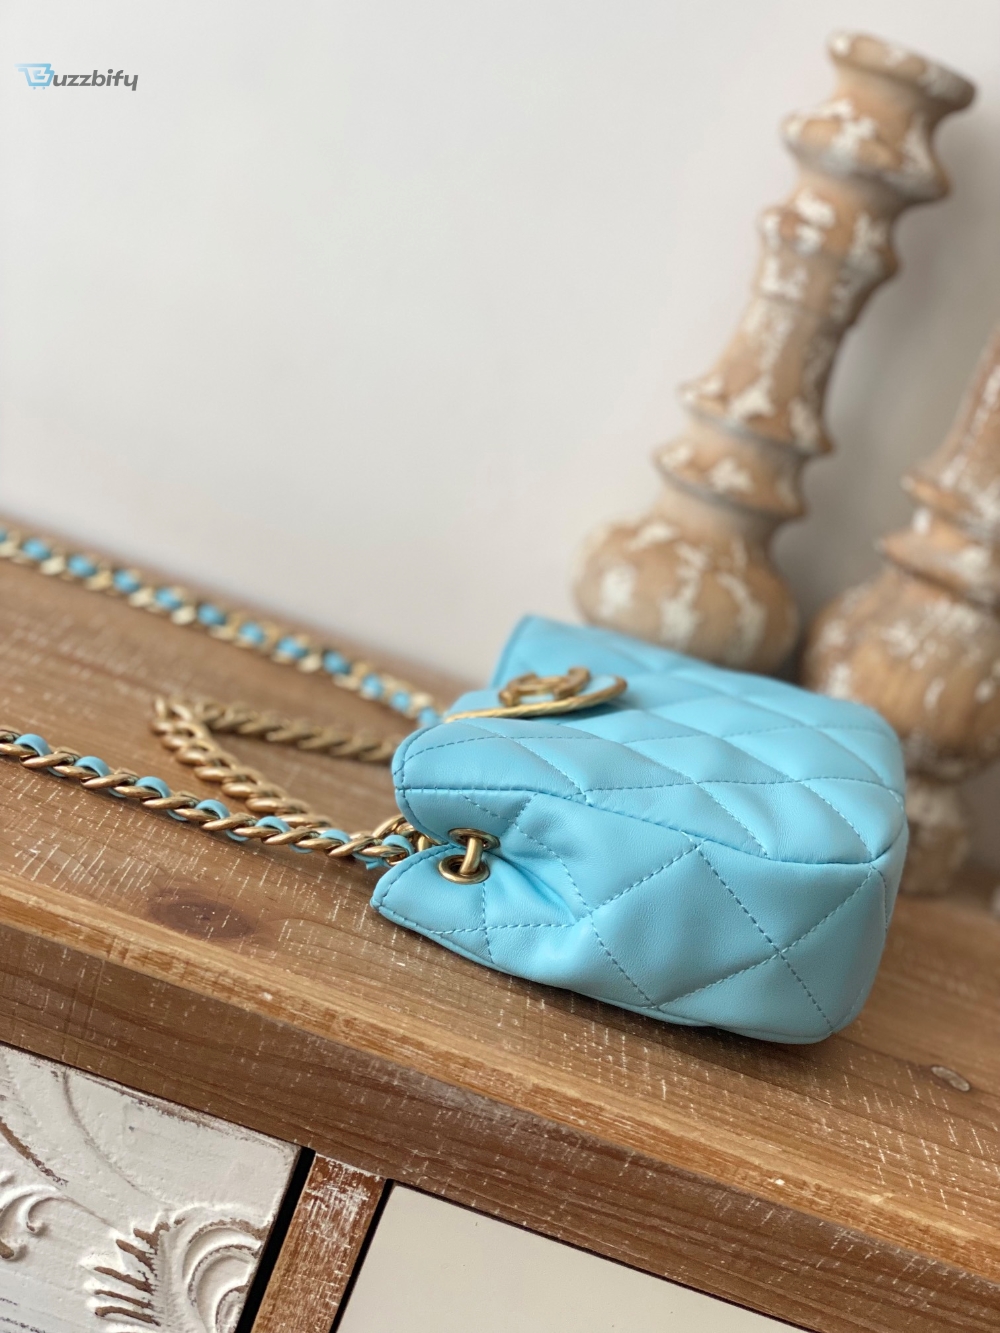 Chanel Small Hobo Bag Gold Hardware Blue For Women, Women’s Handbags, Shoulder Bags 7.5in/19cm